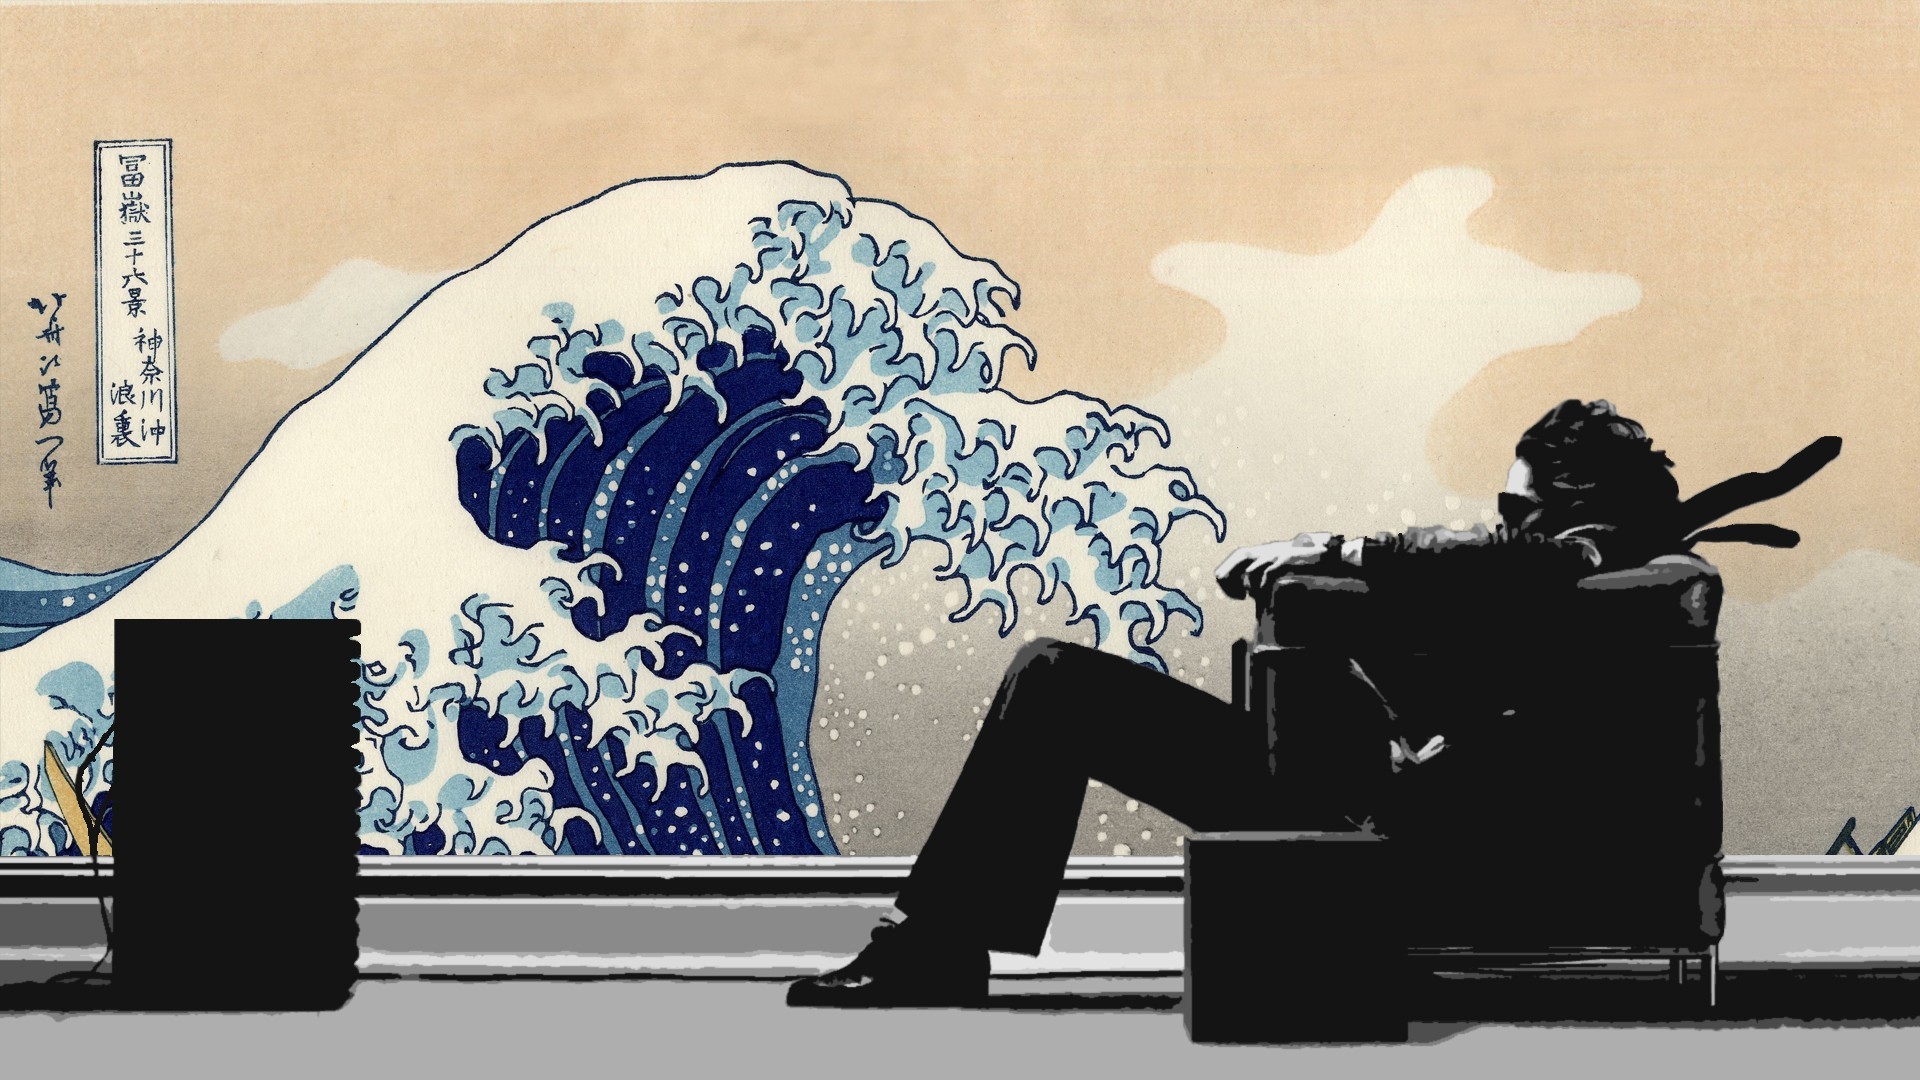 Hitachi Maxell The Great Wave Off Kanagawa Artwork 1920x1080